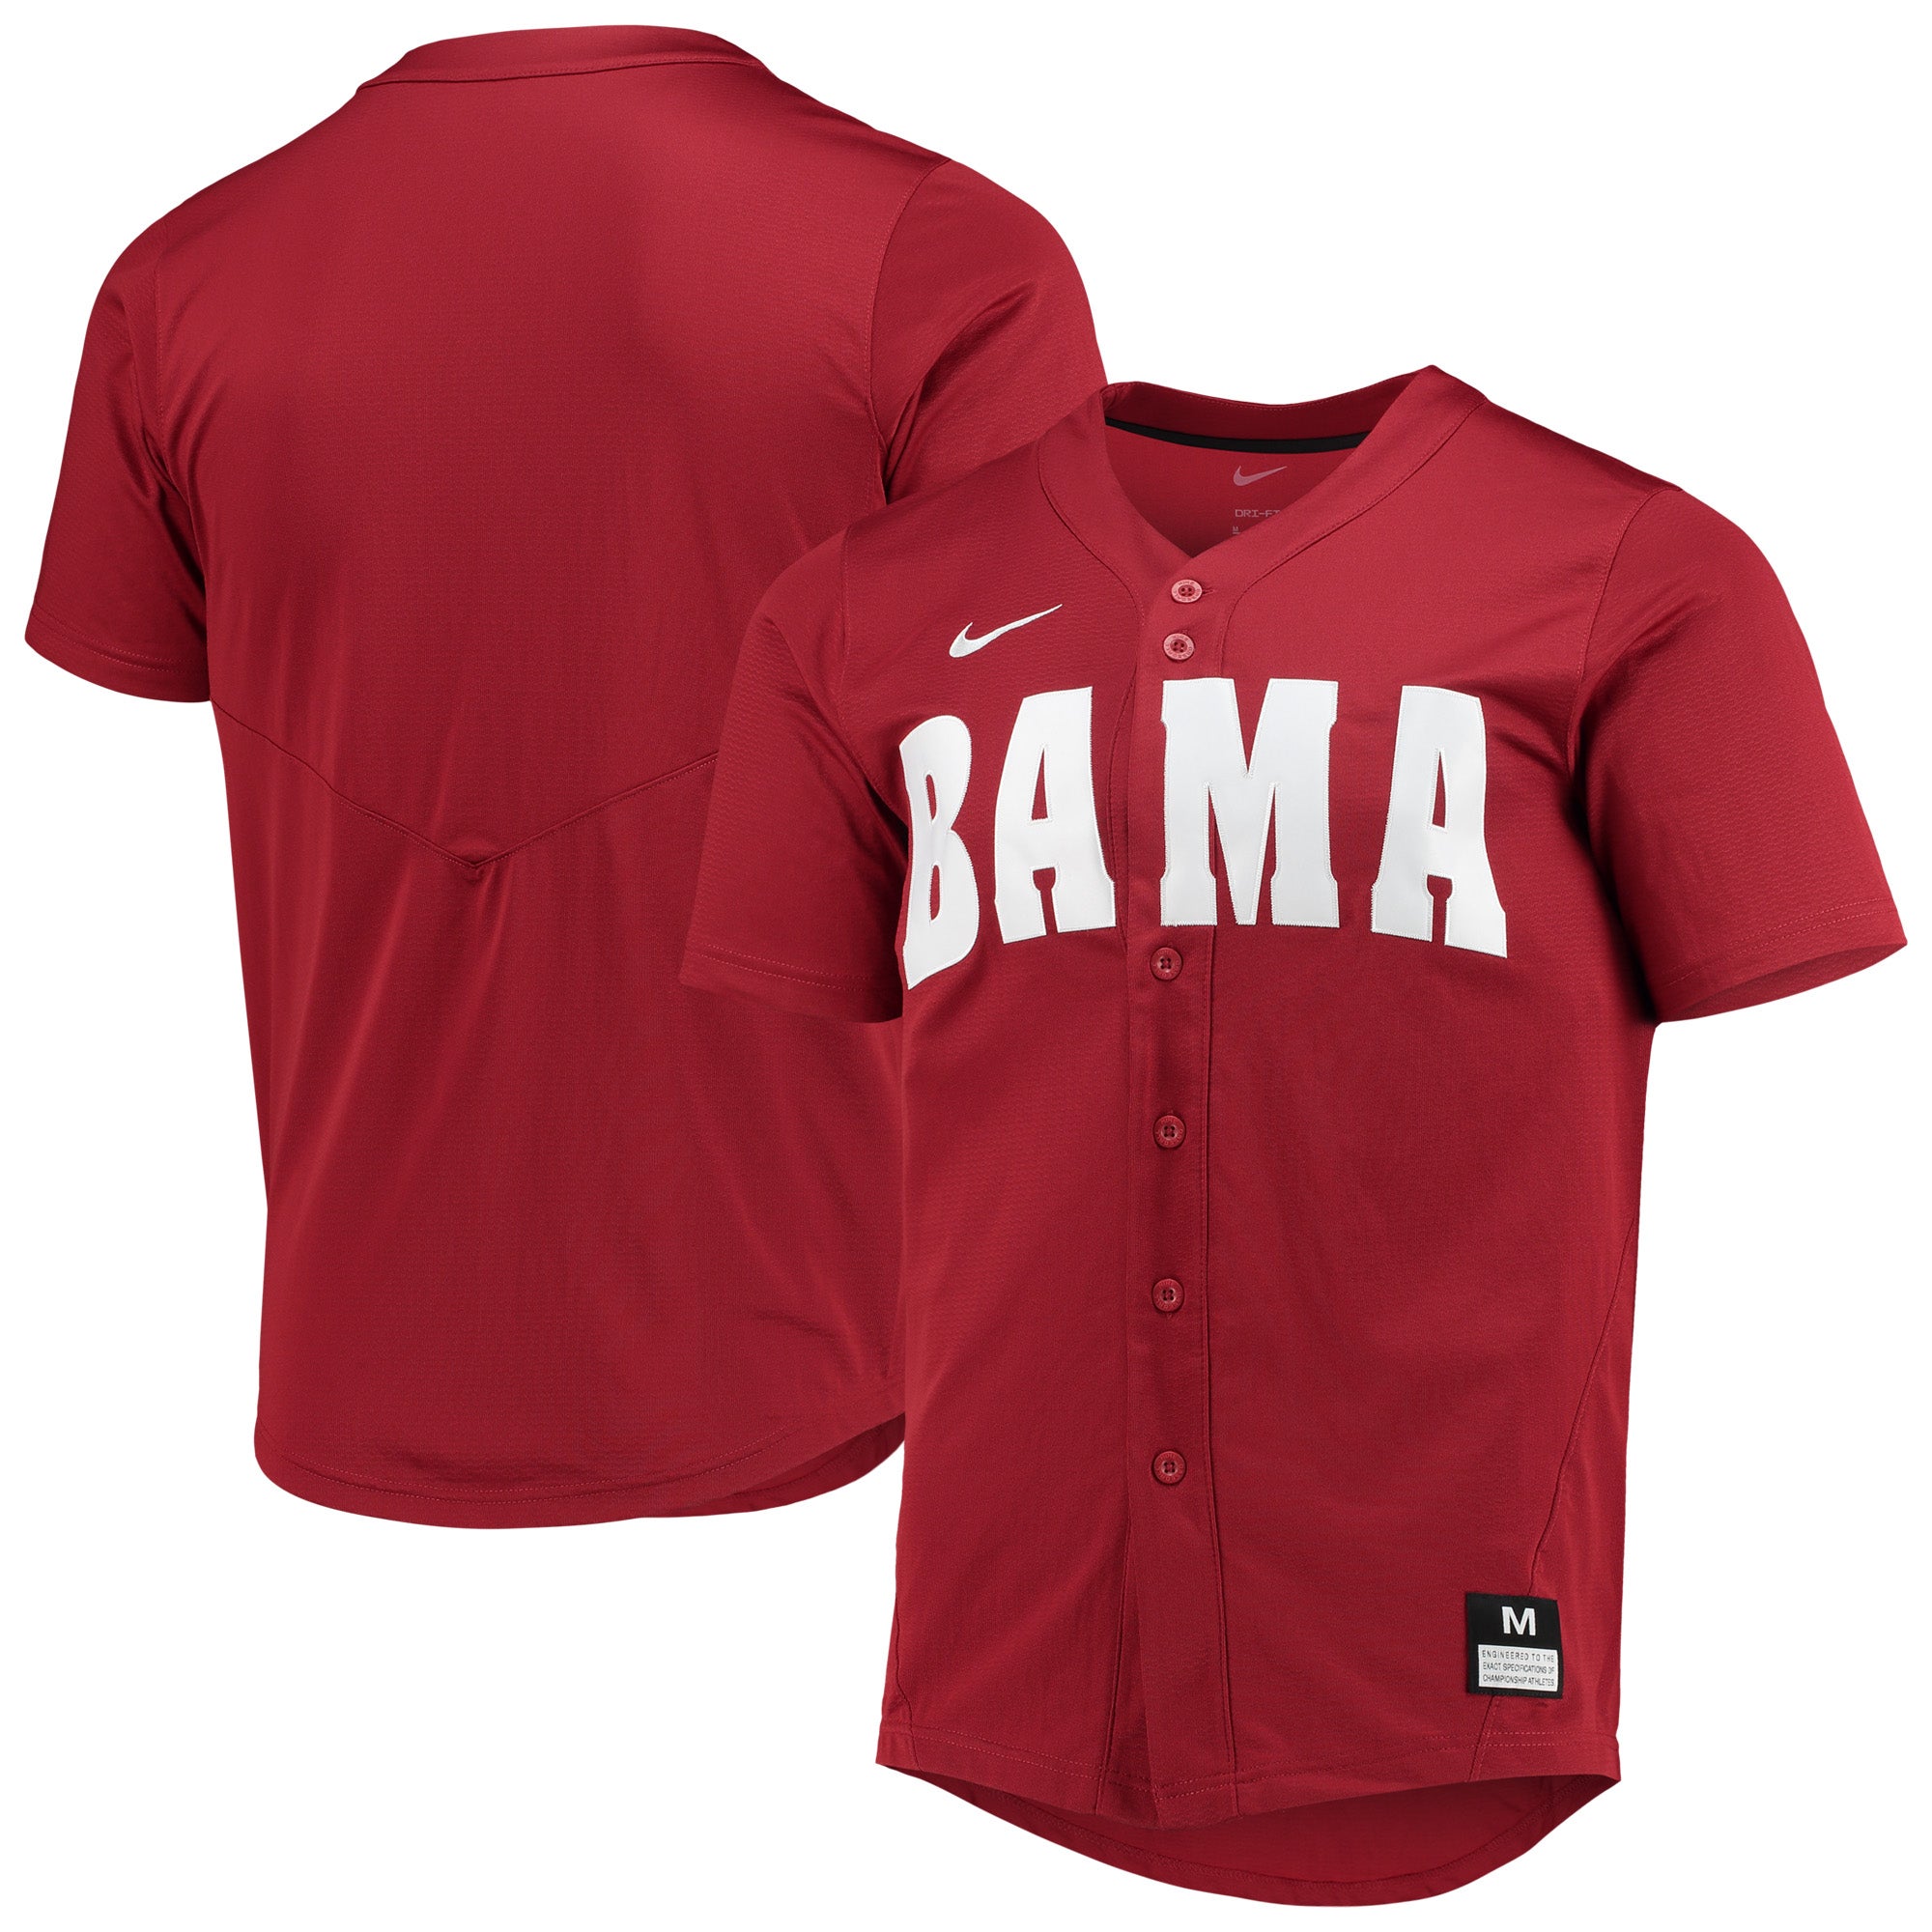 Alabama Crimson Tide softball champions jerseys